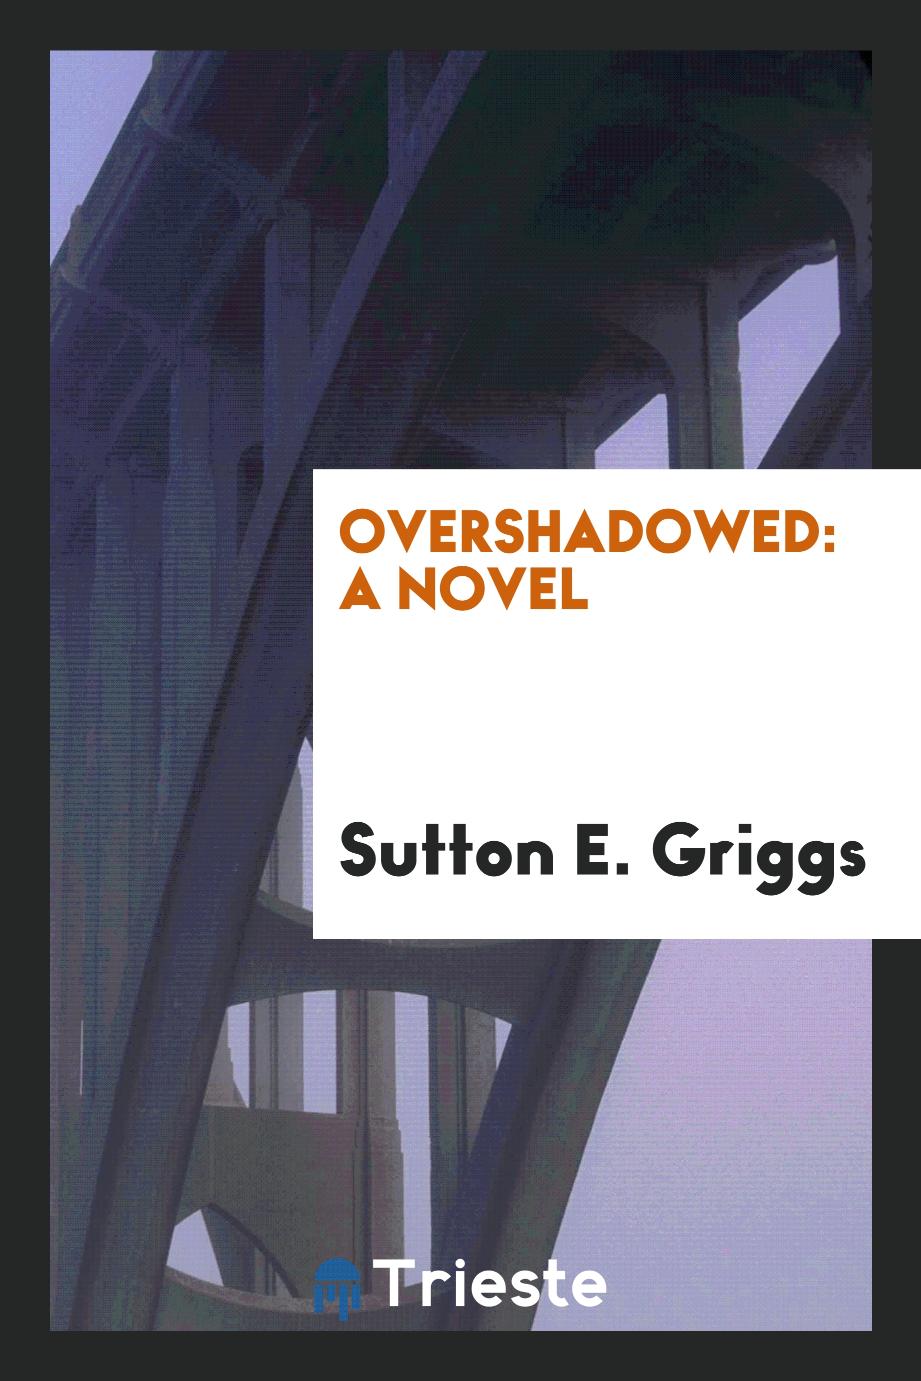 Overshadowed: a novel